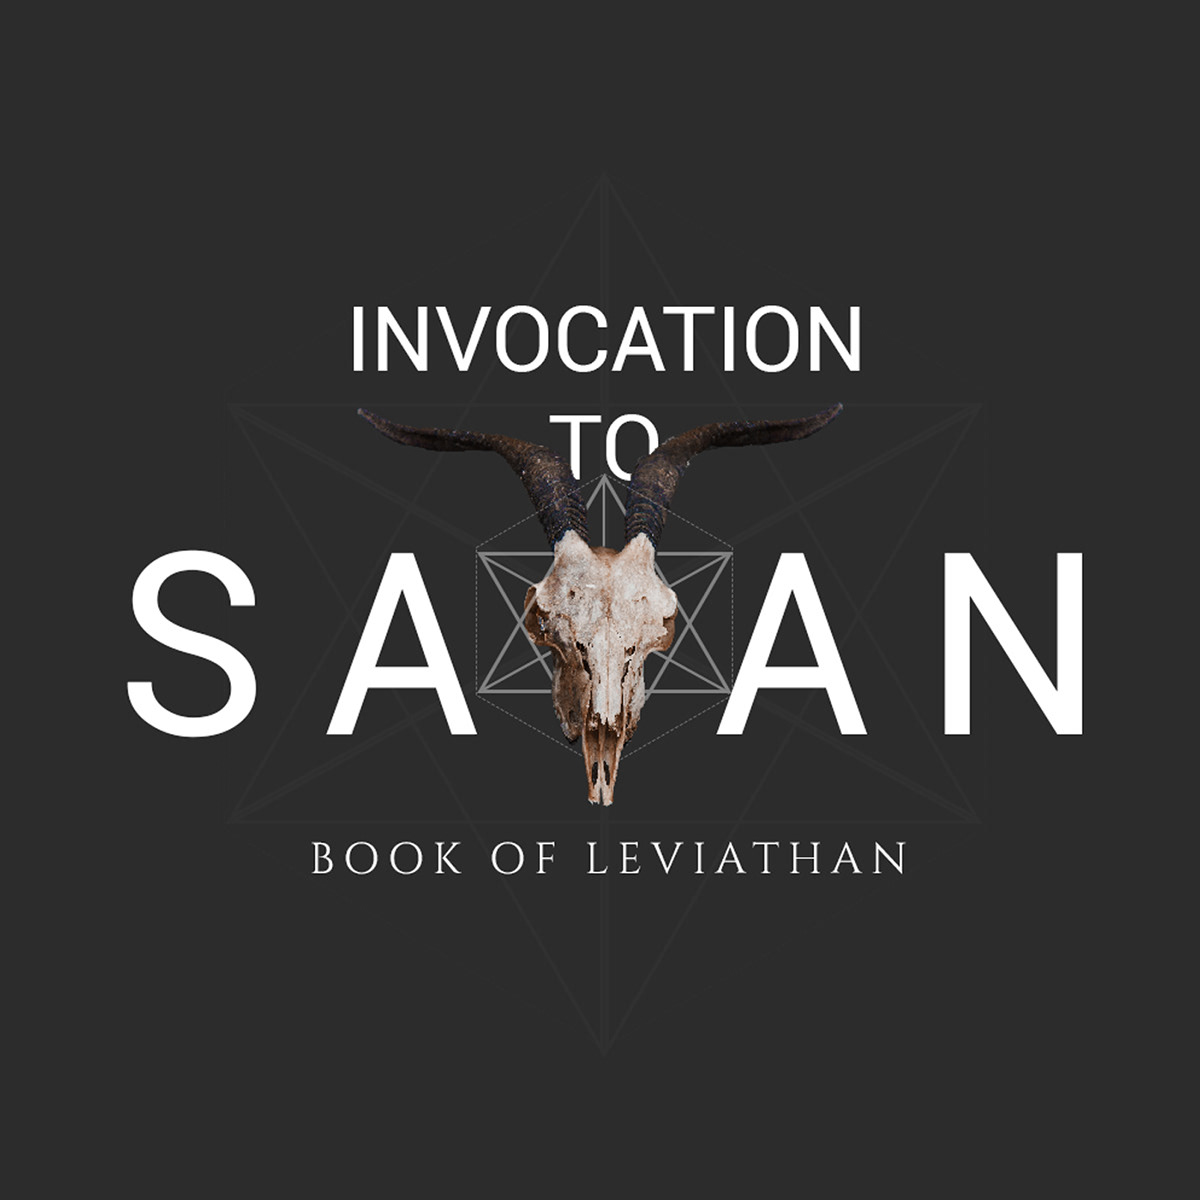 satanic satanism Satanist t-shirt T-Shirt Design